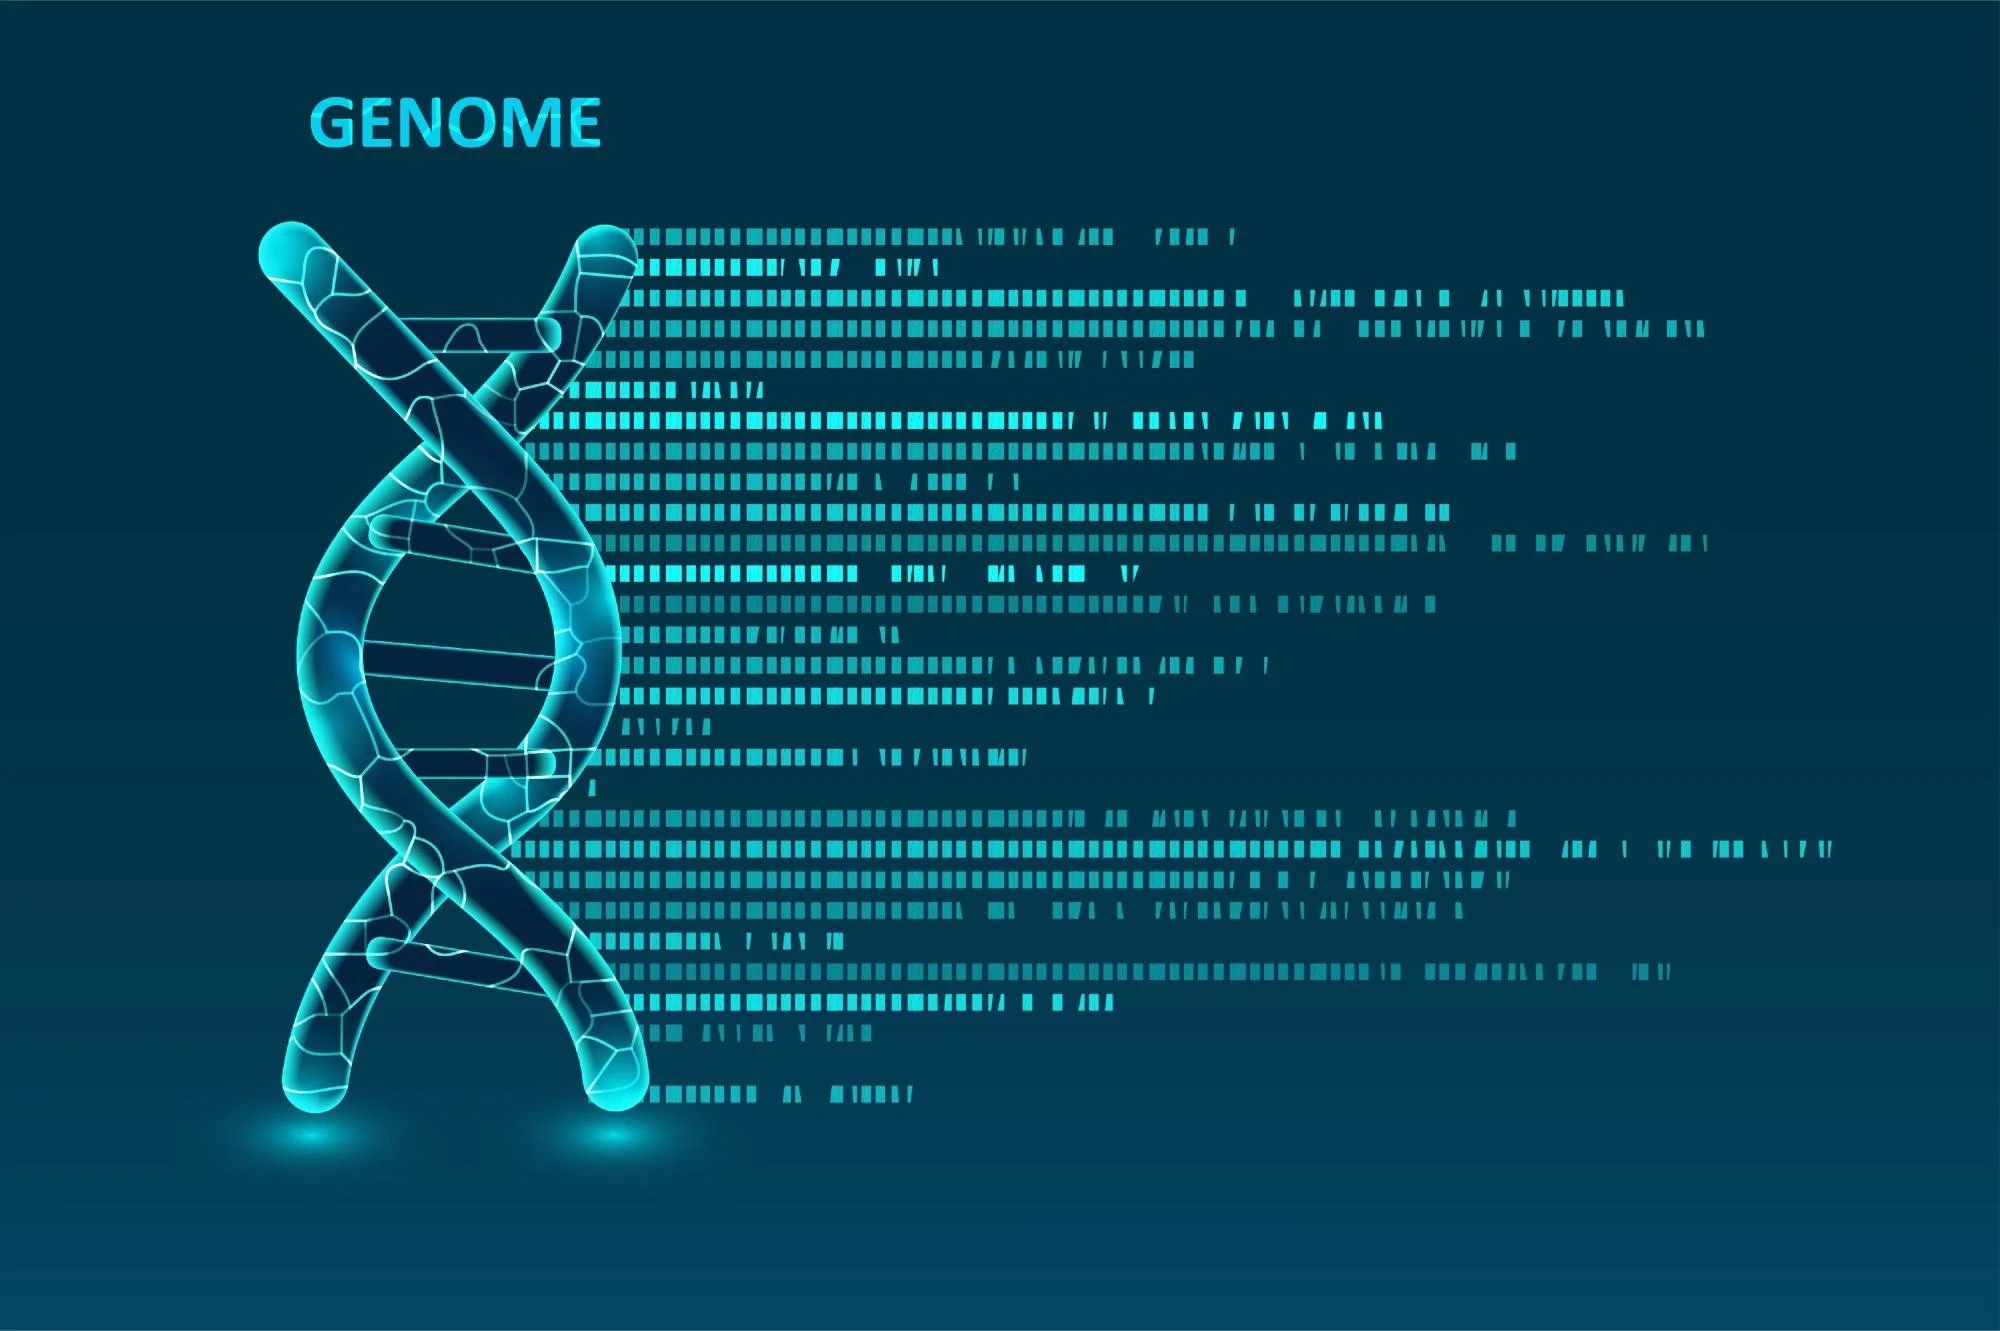 Decoding the genome: how AI is revolutionising genomic analysis